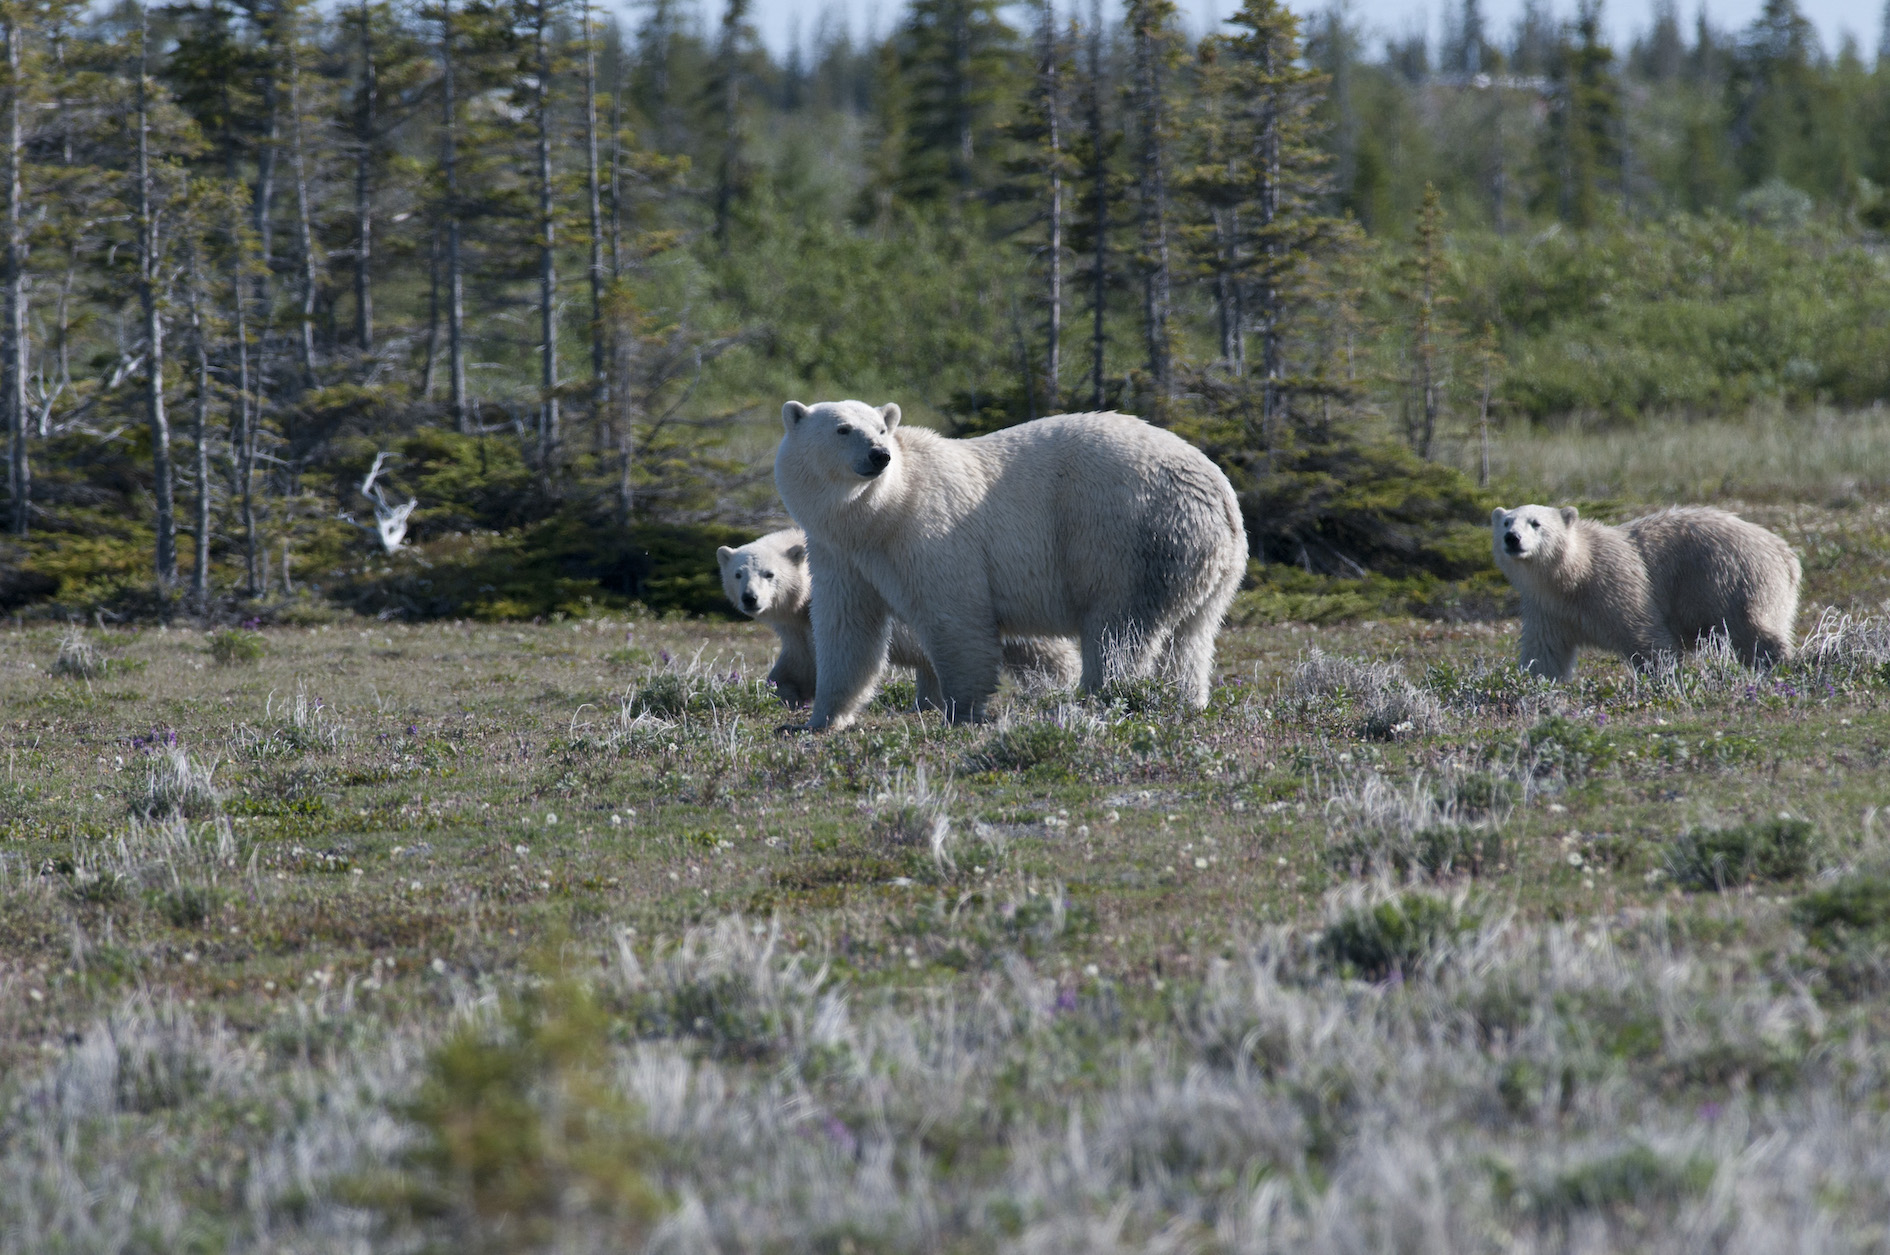 Three polar bears walk in a grassy field